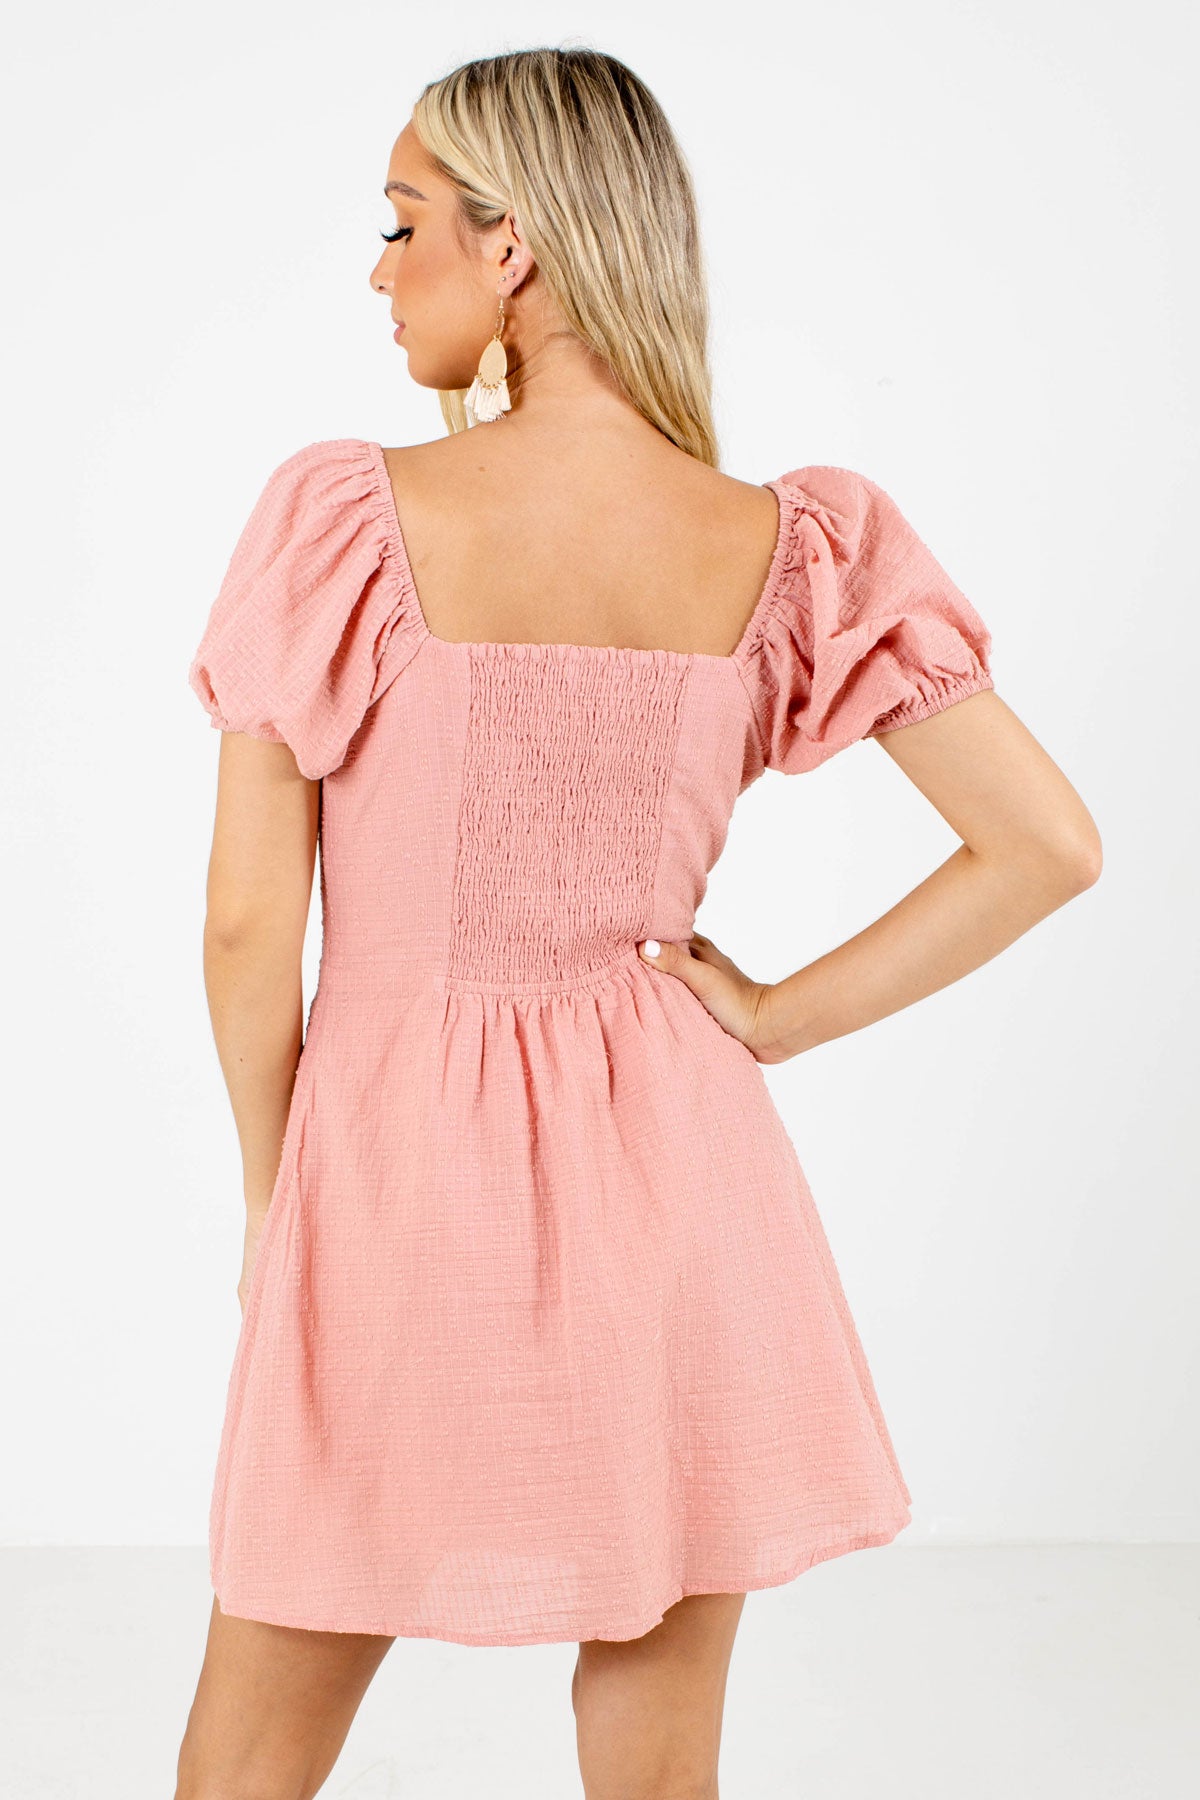 Women's Pink Smocked Back Boutique Mini Dress